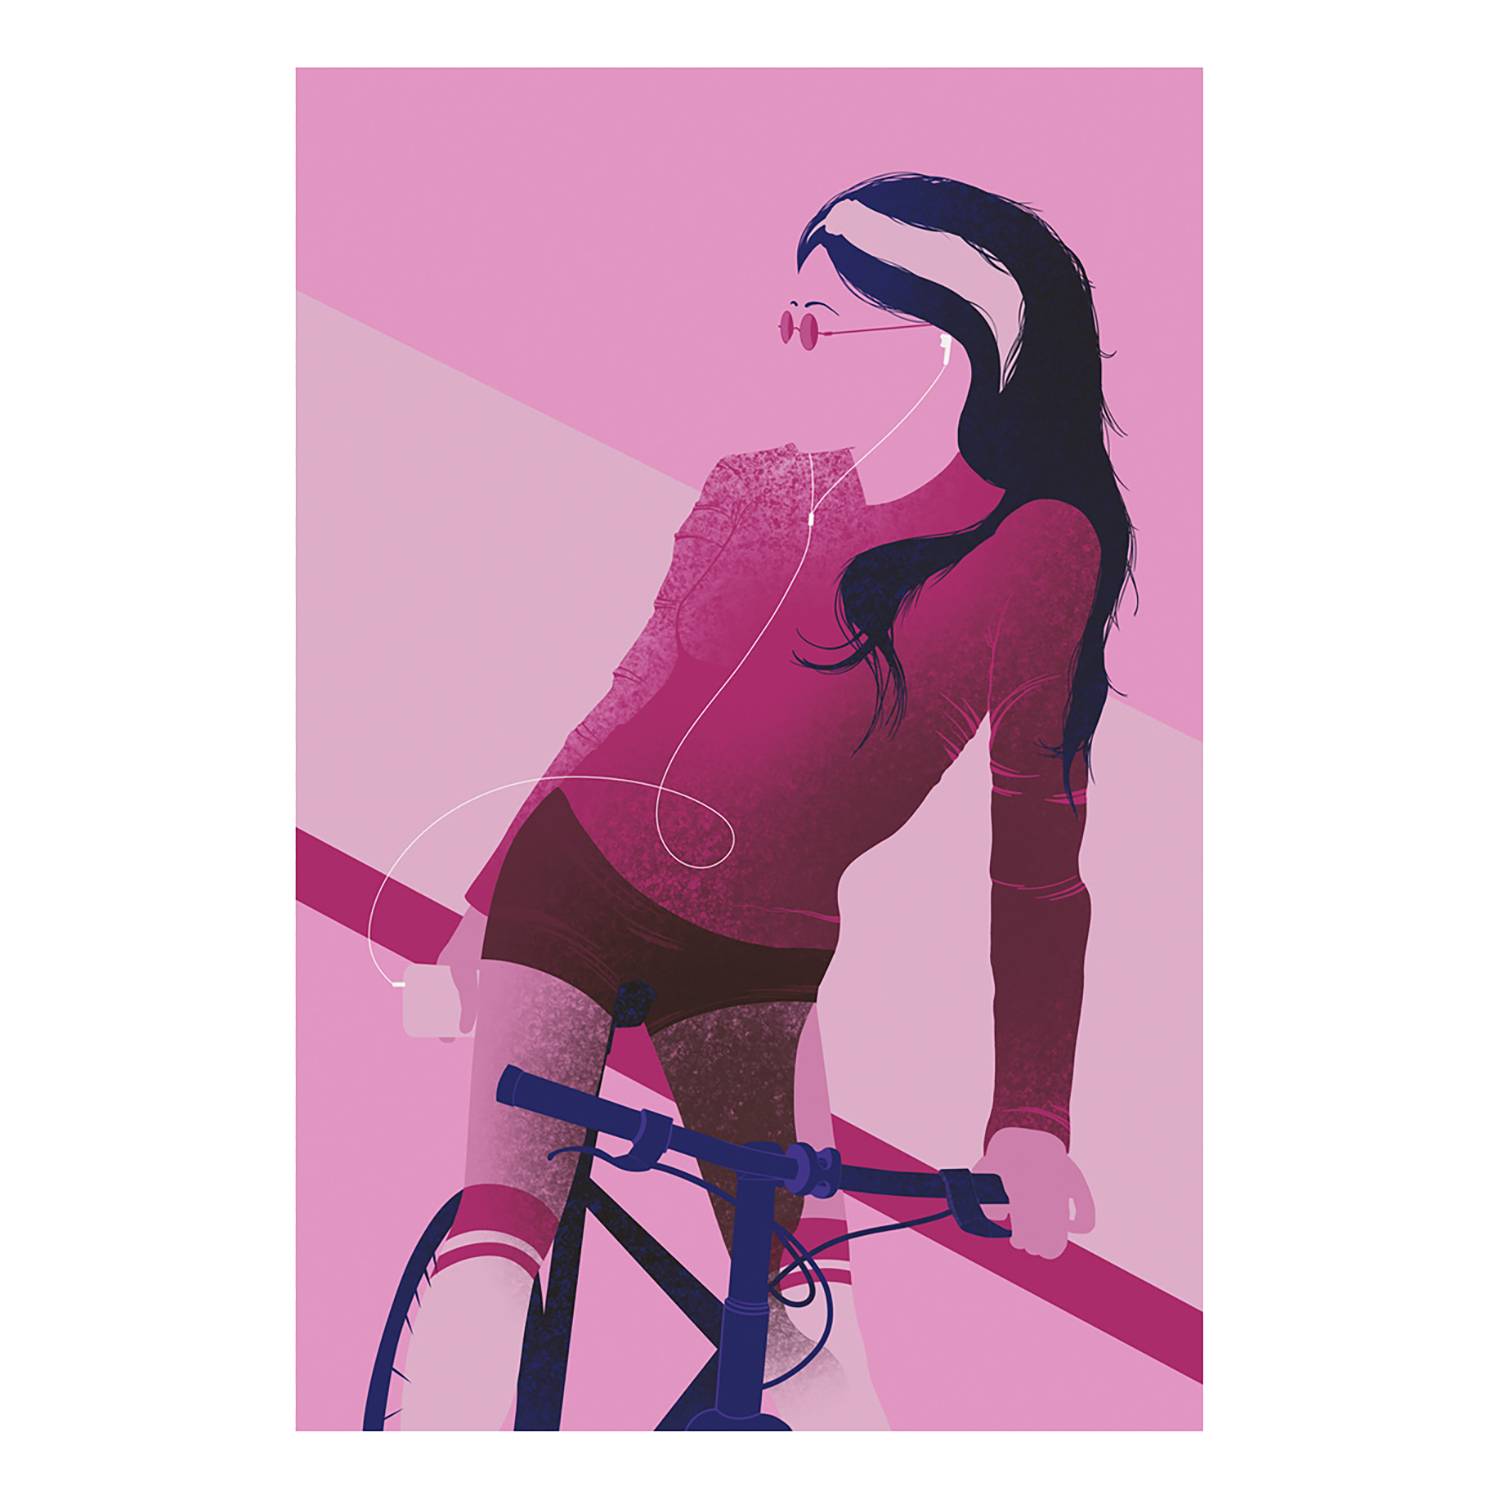 Wandbild Woman on Bicycle kaufen | home24